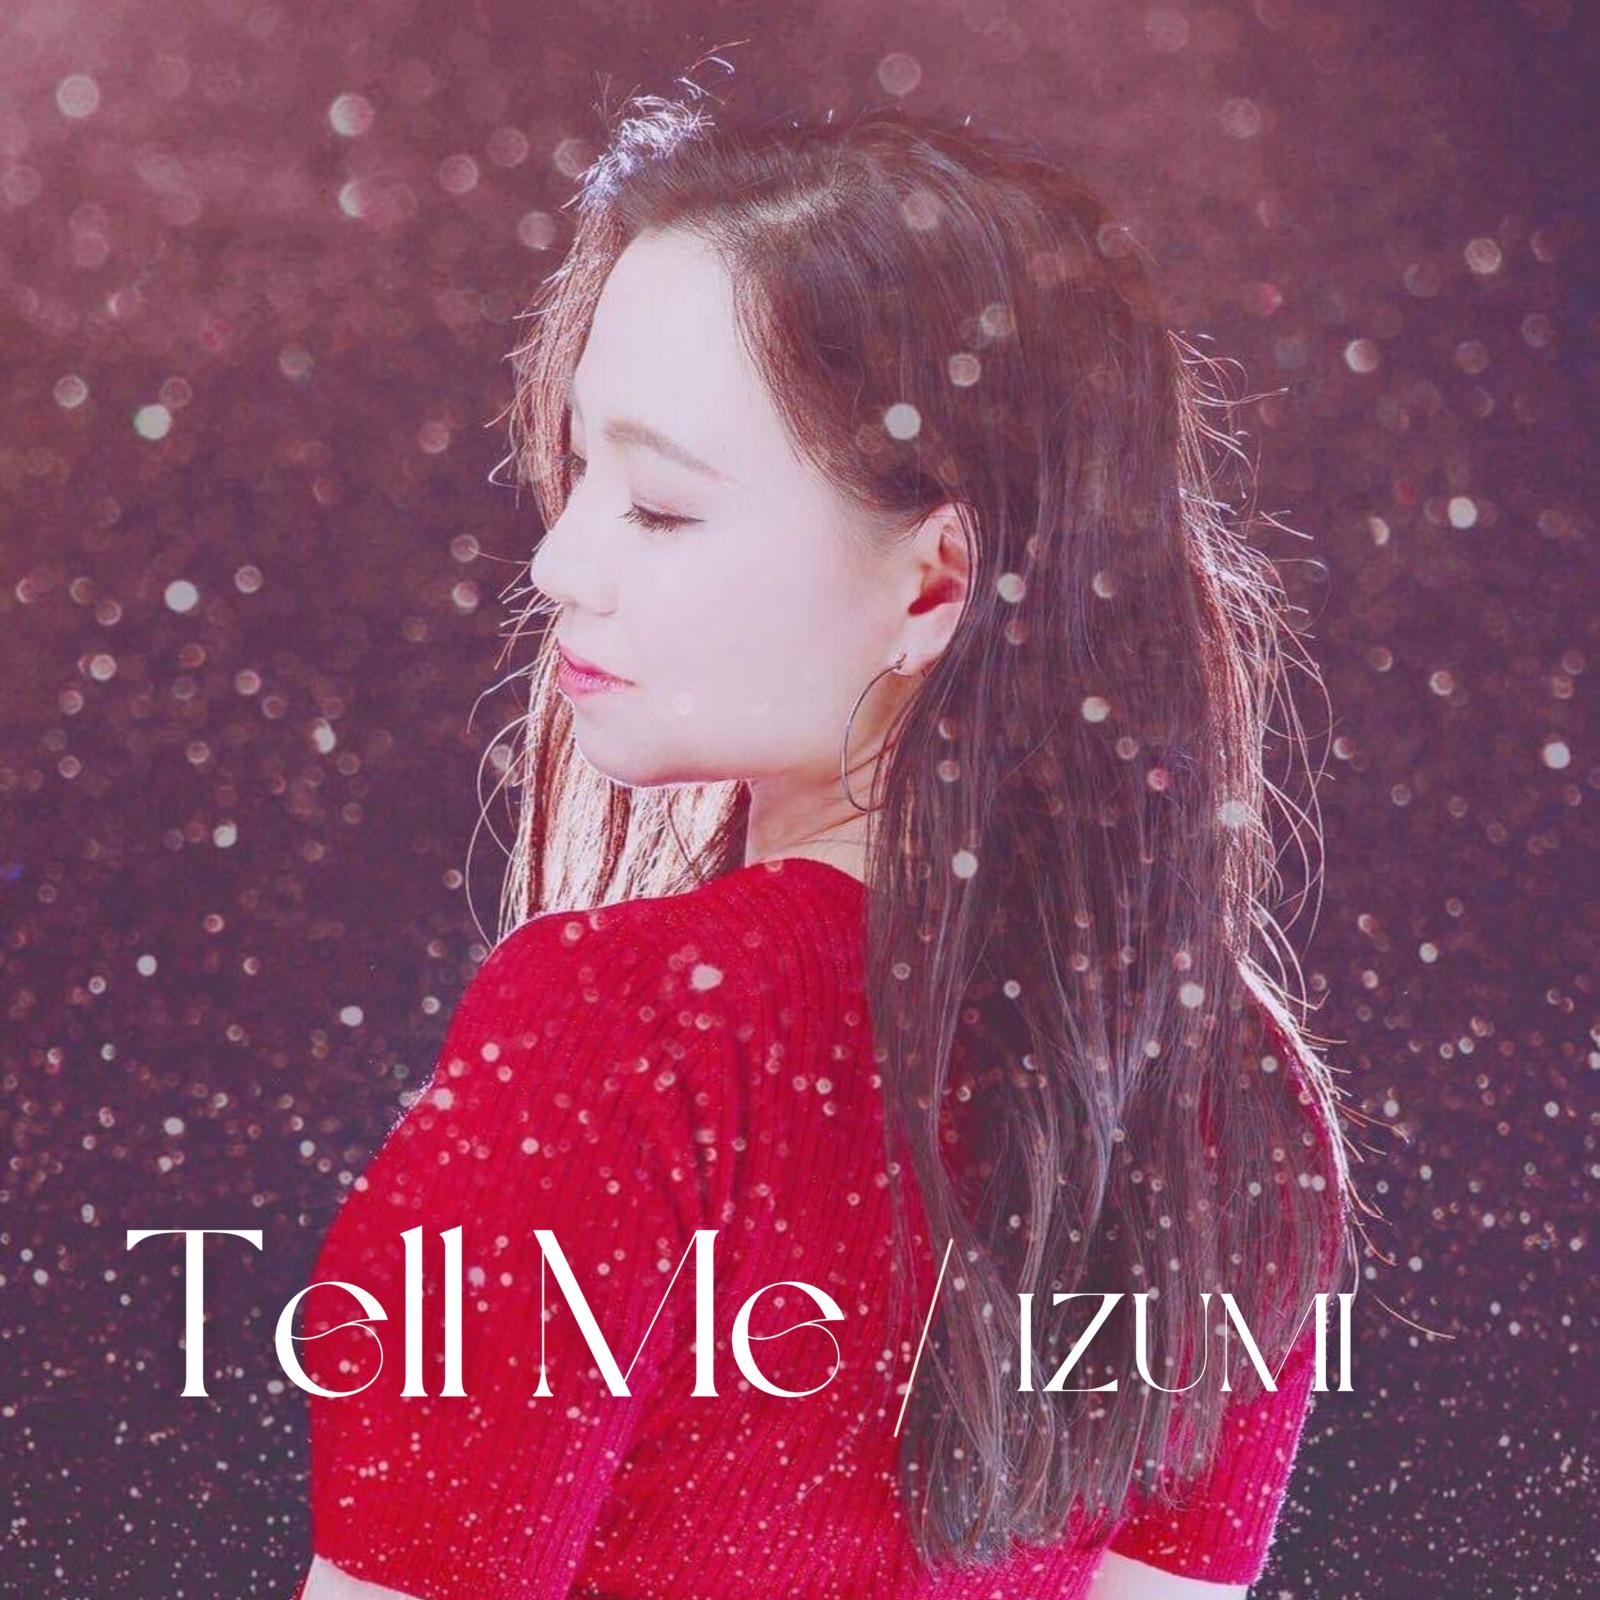 Izumi - Tell me